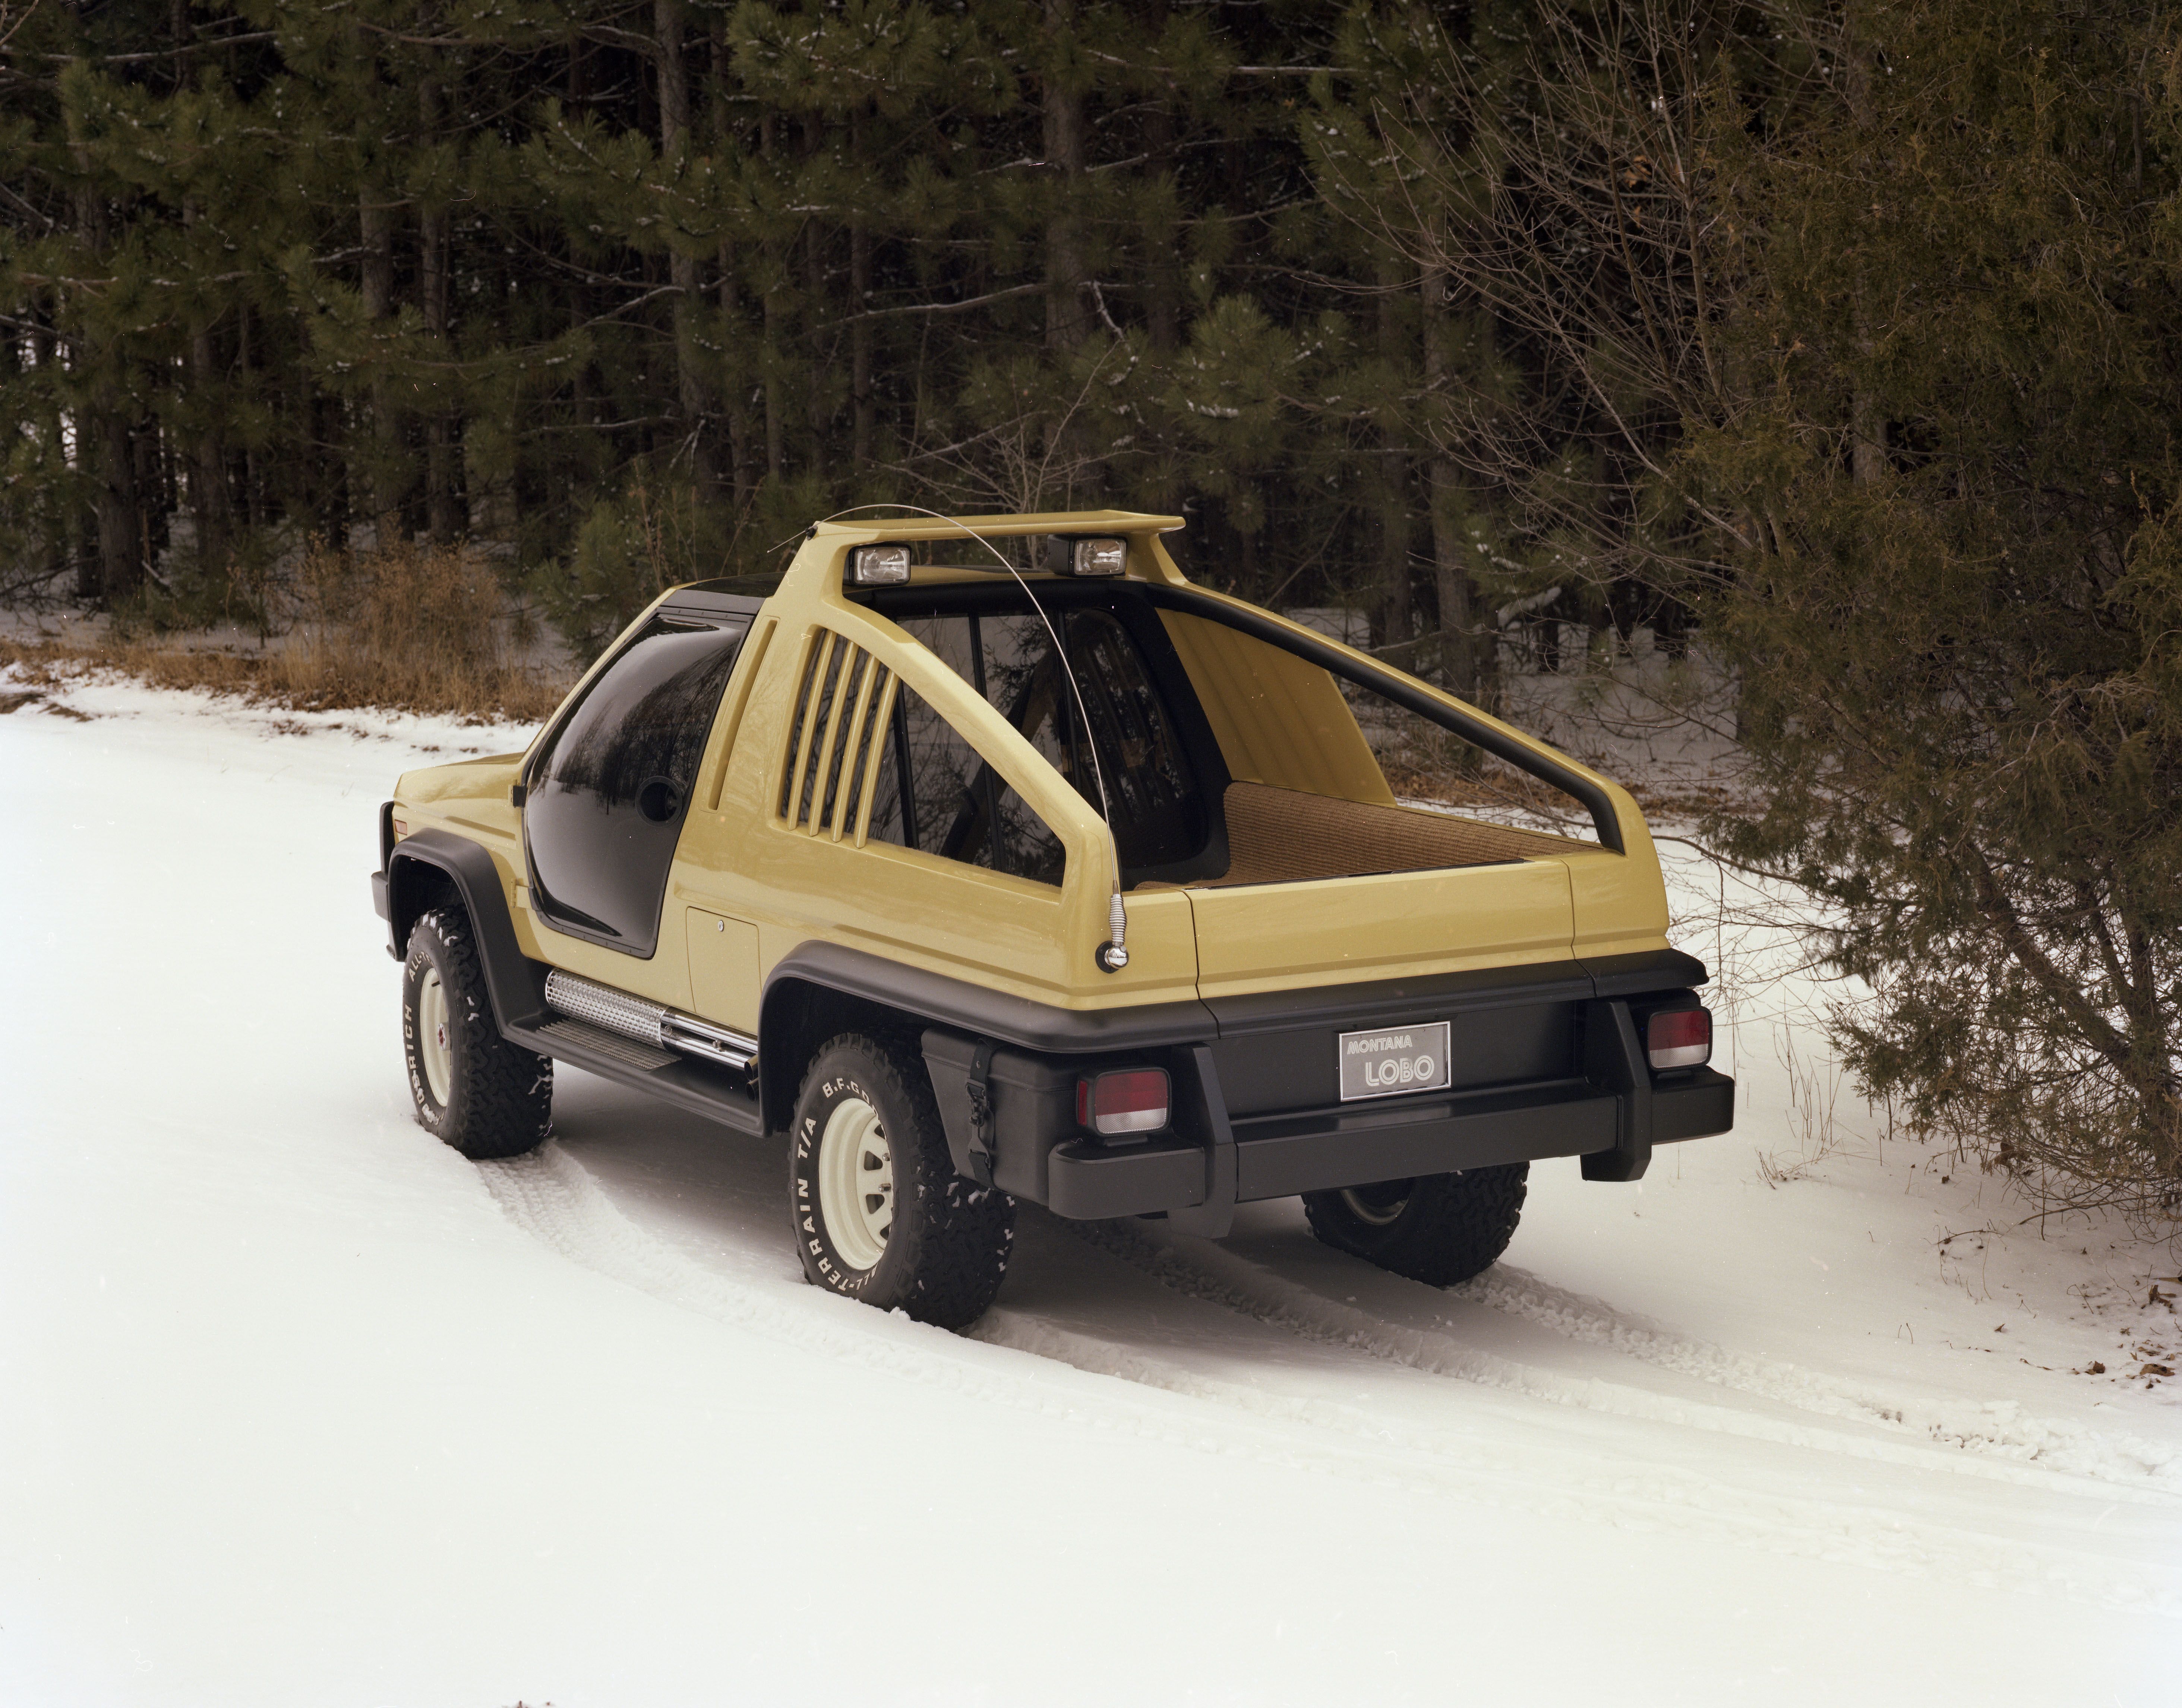 1981 Ford Bronco Montana Lobo Concept